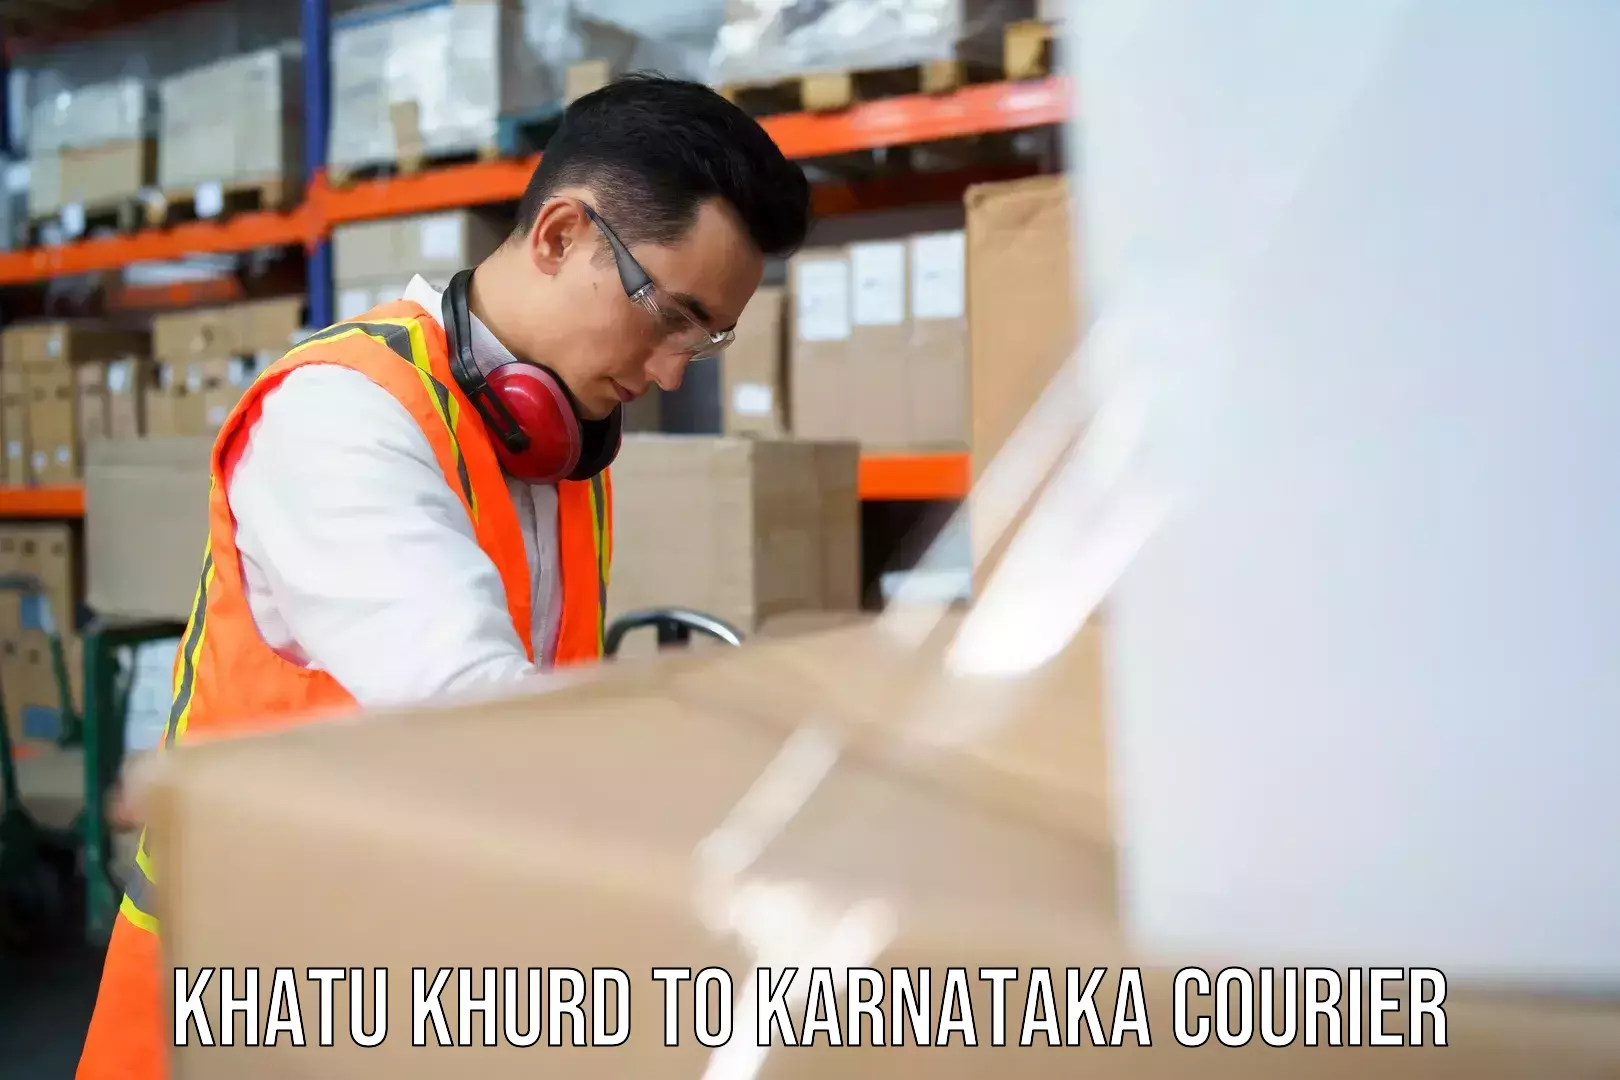 Sustainable courier practices Khatu Khurd to Karnataka